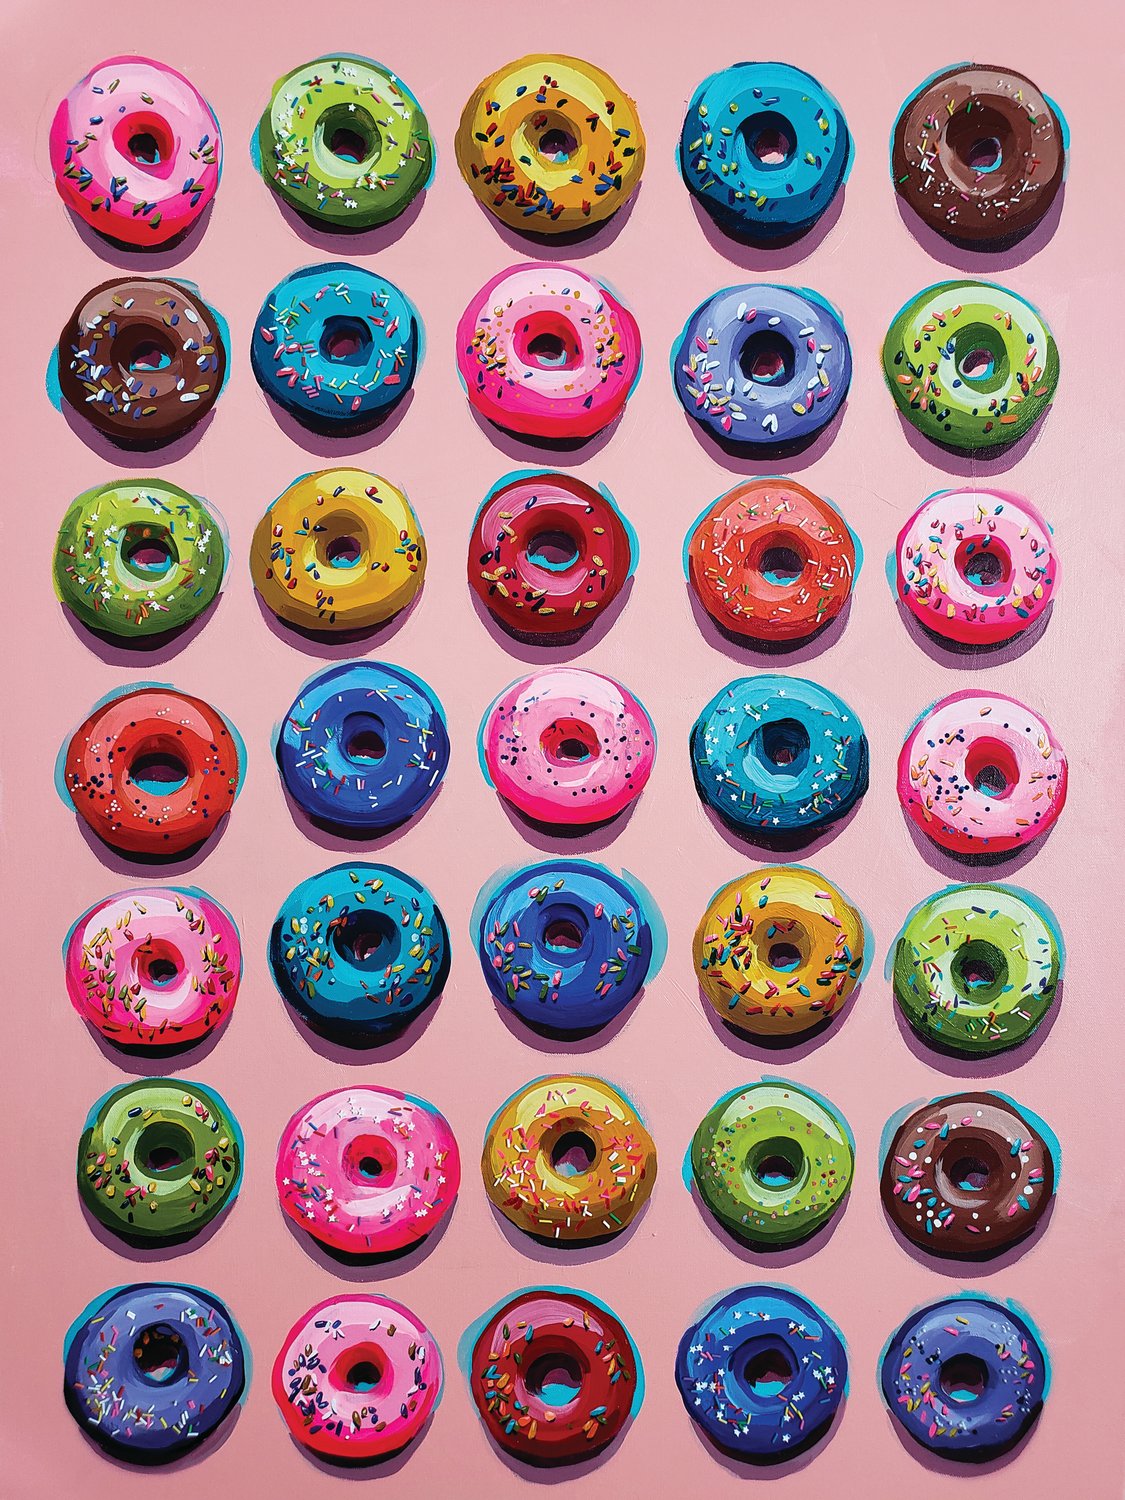 A painting of doughnuts by Svitlana Martynjuk.